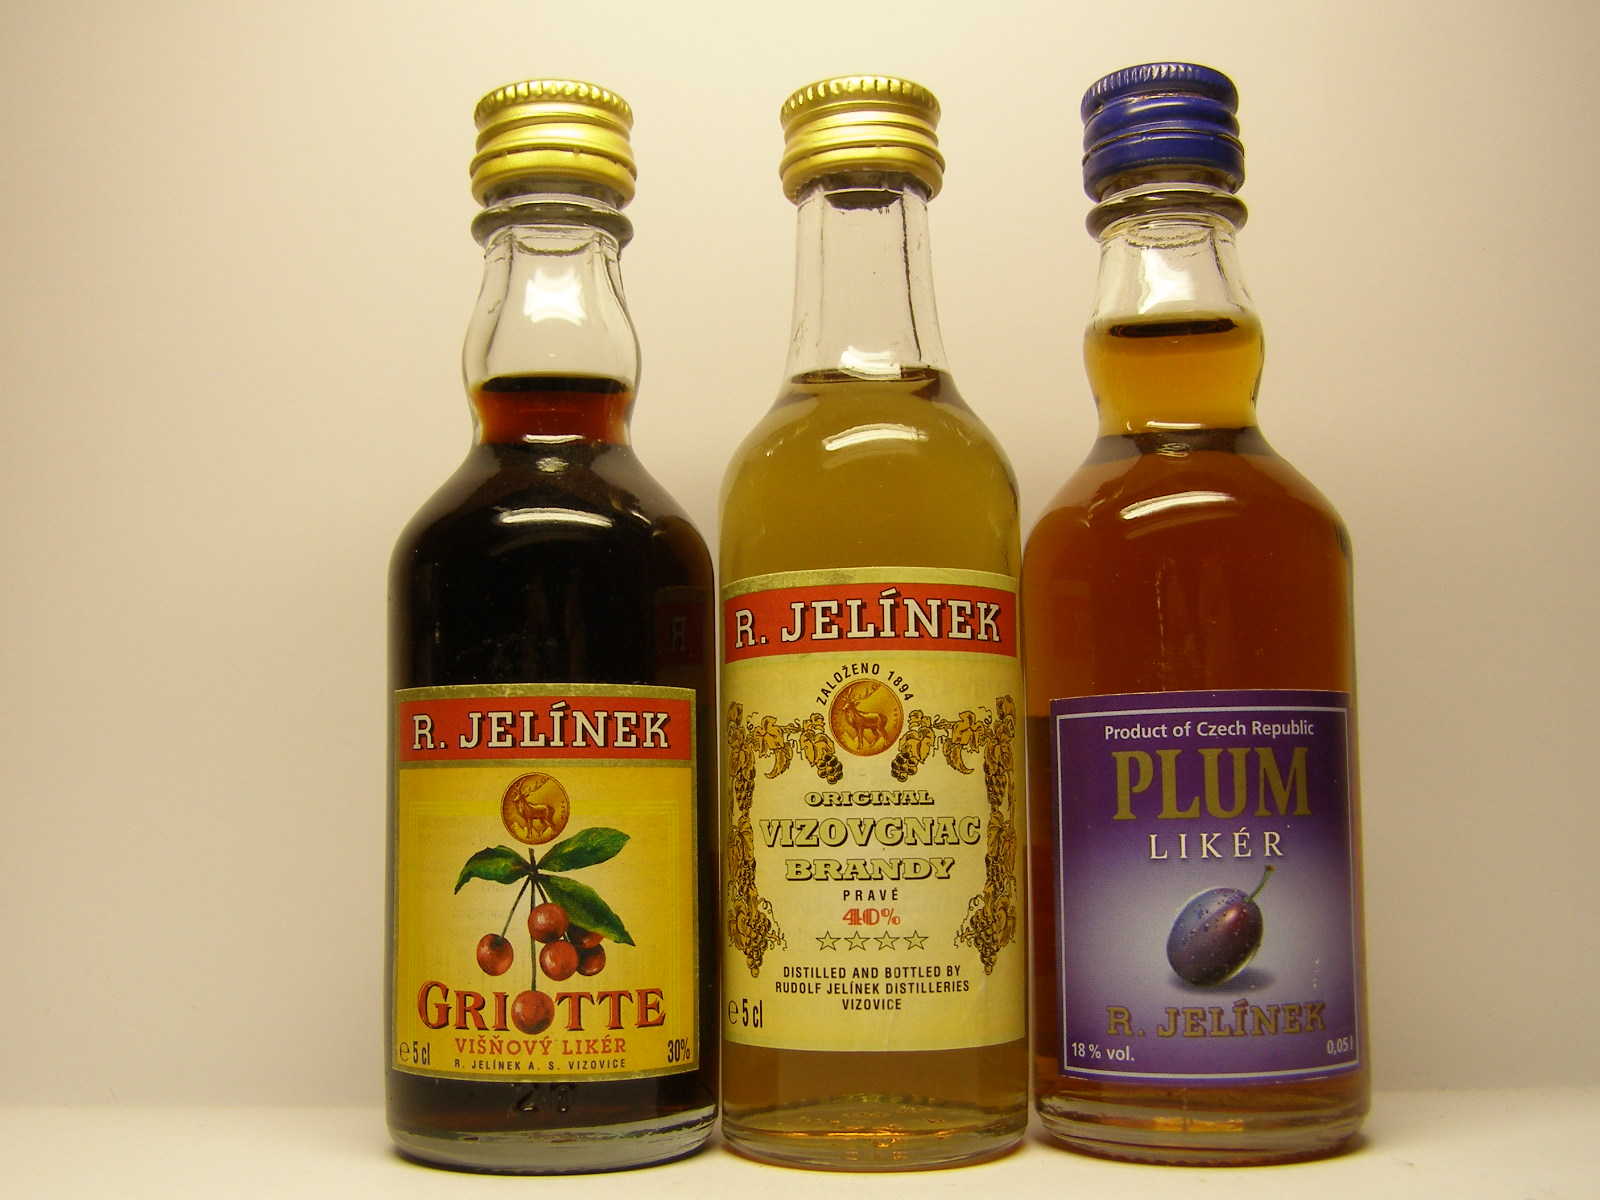 R.JELINEK Griotte - Vizovgnac Brandy - Plum Liker